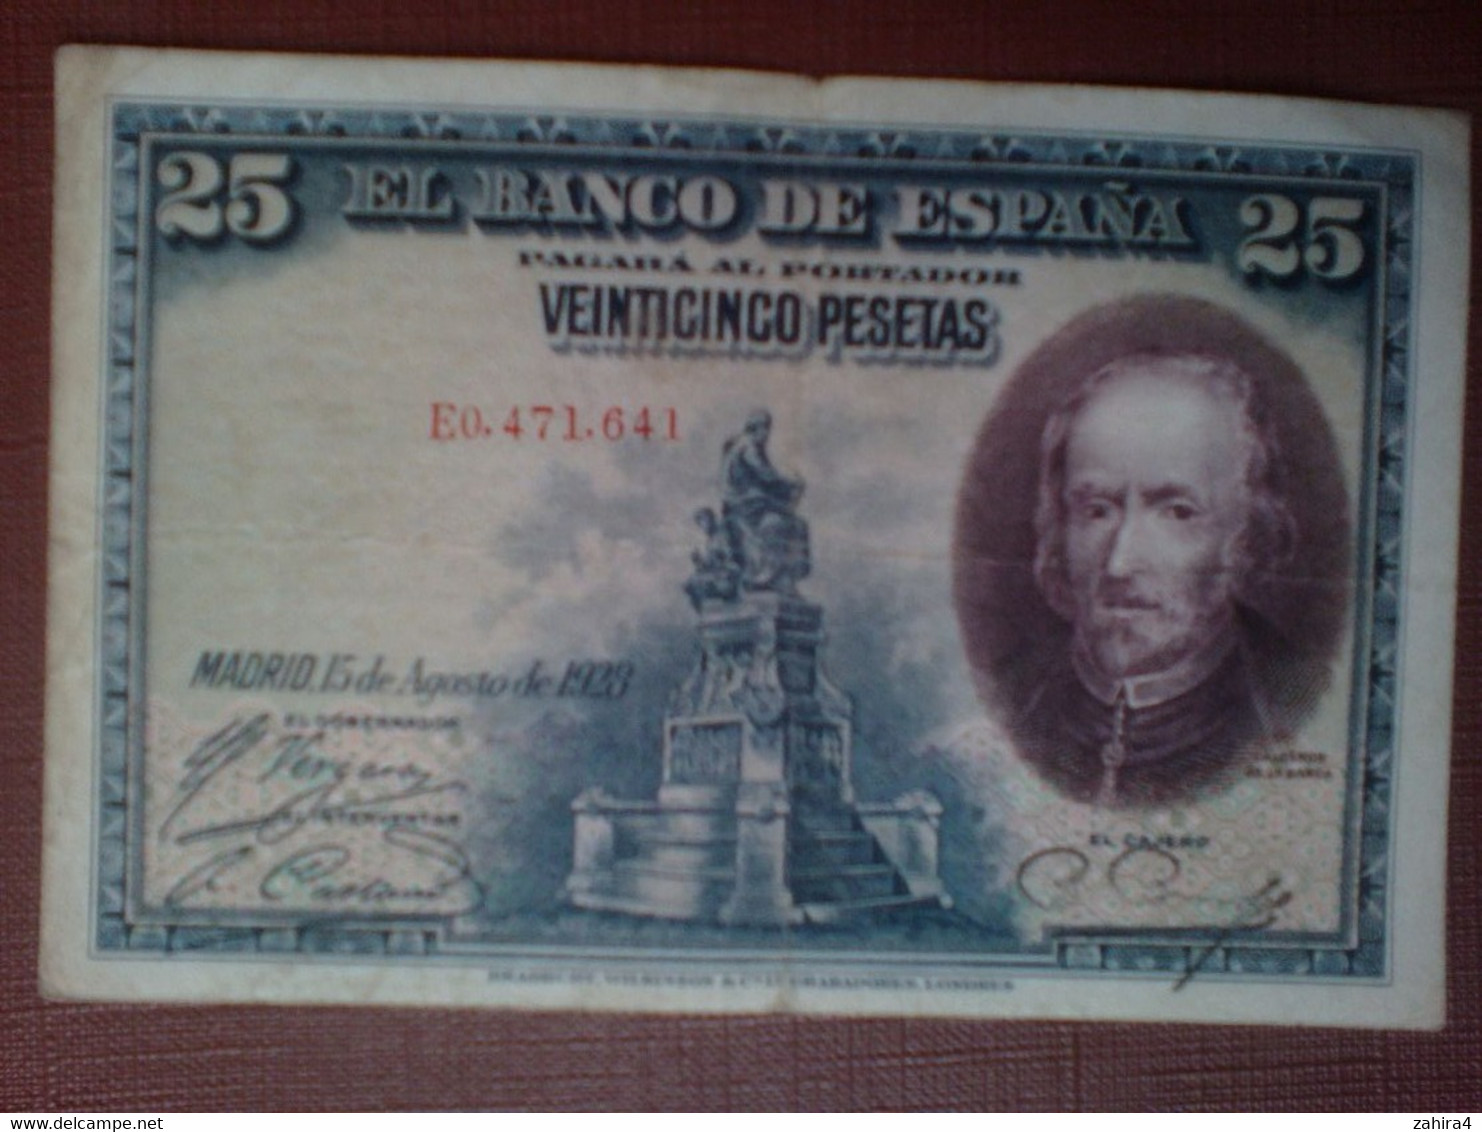 25 Pesetas - El Banco De Espana - E0,471,641 - Madrid 15 De Agosto De 1928 - Calderon De La Barca - 1-2-5-25 Peseten